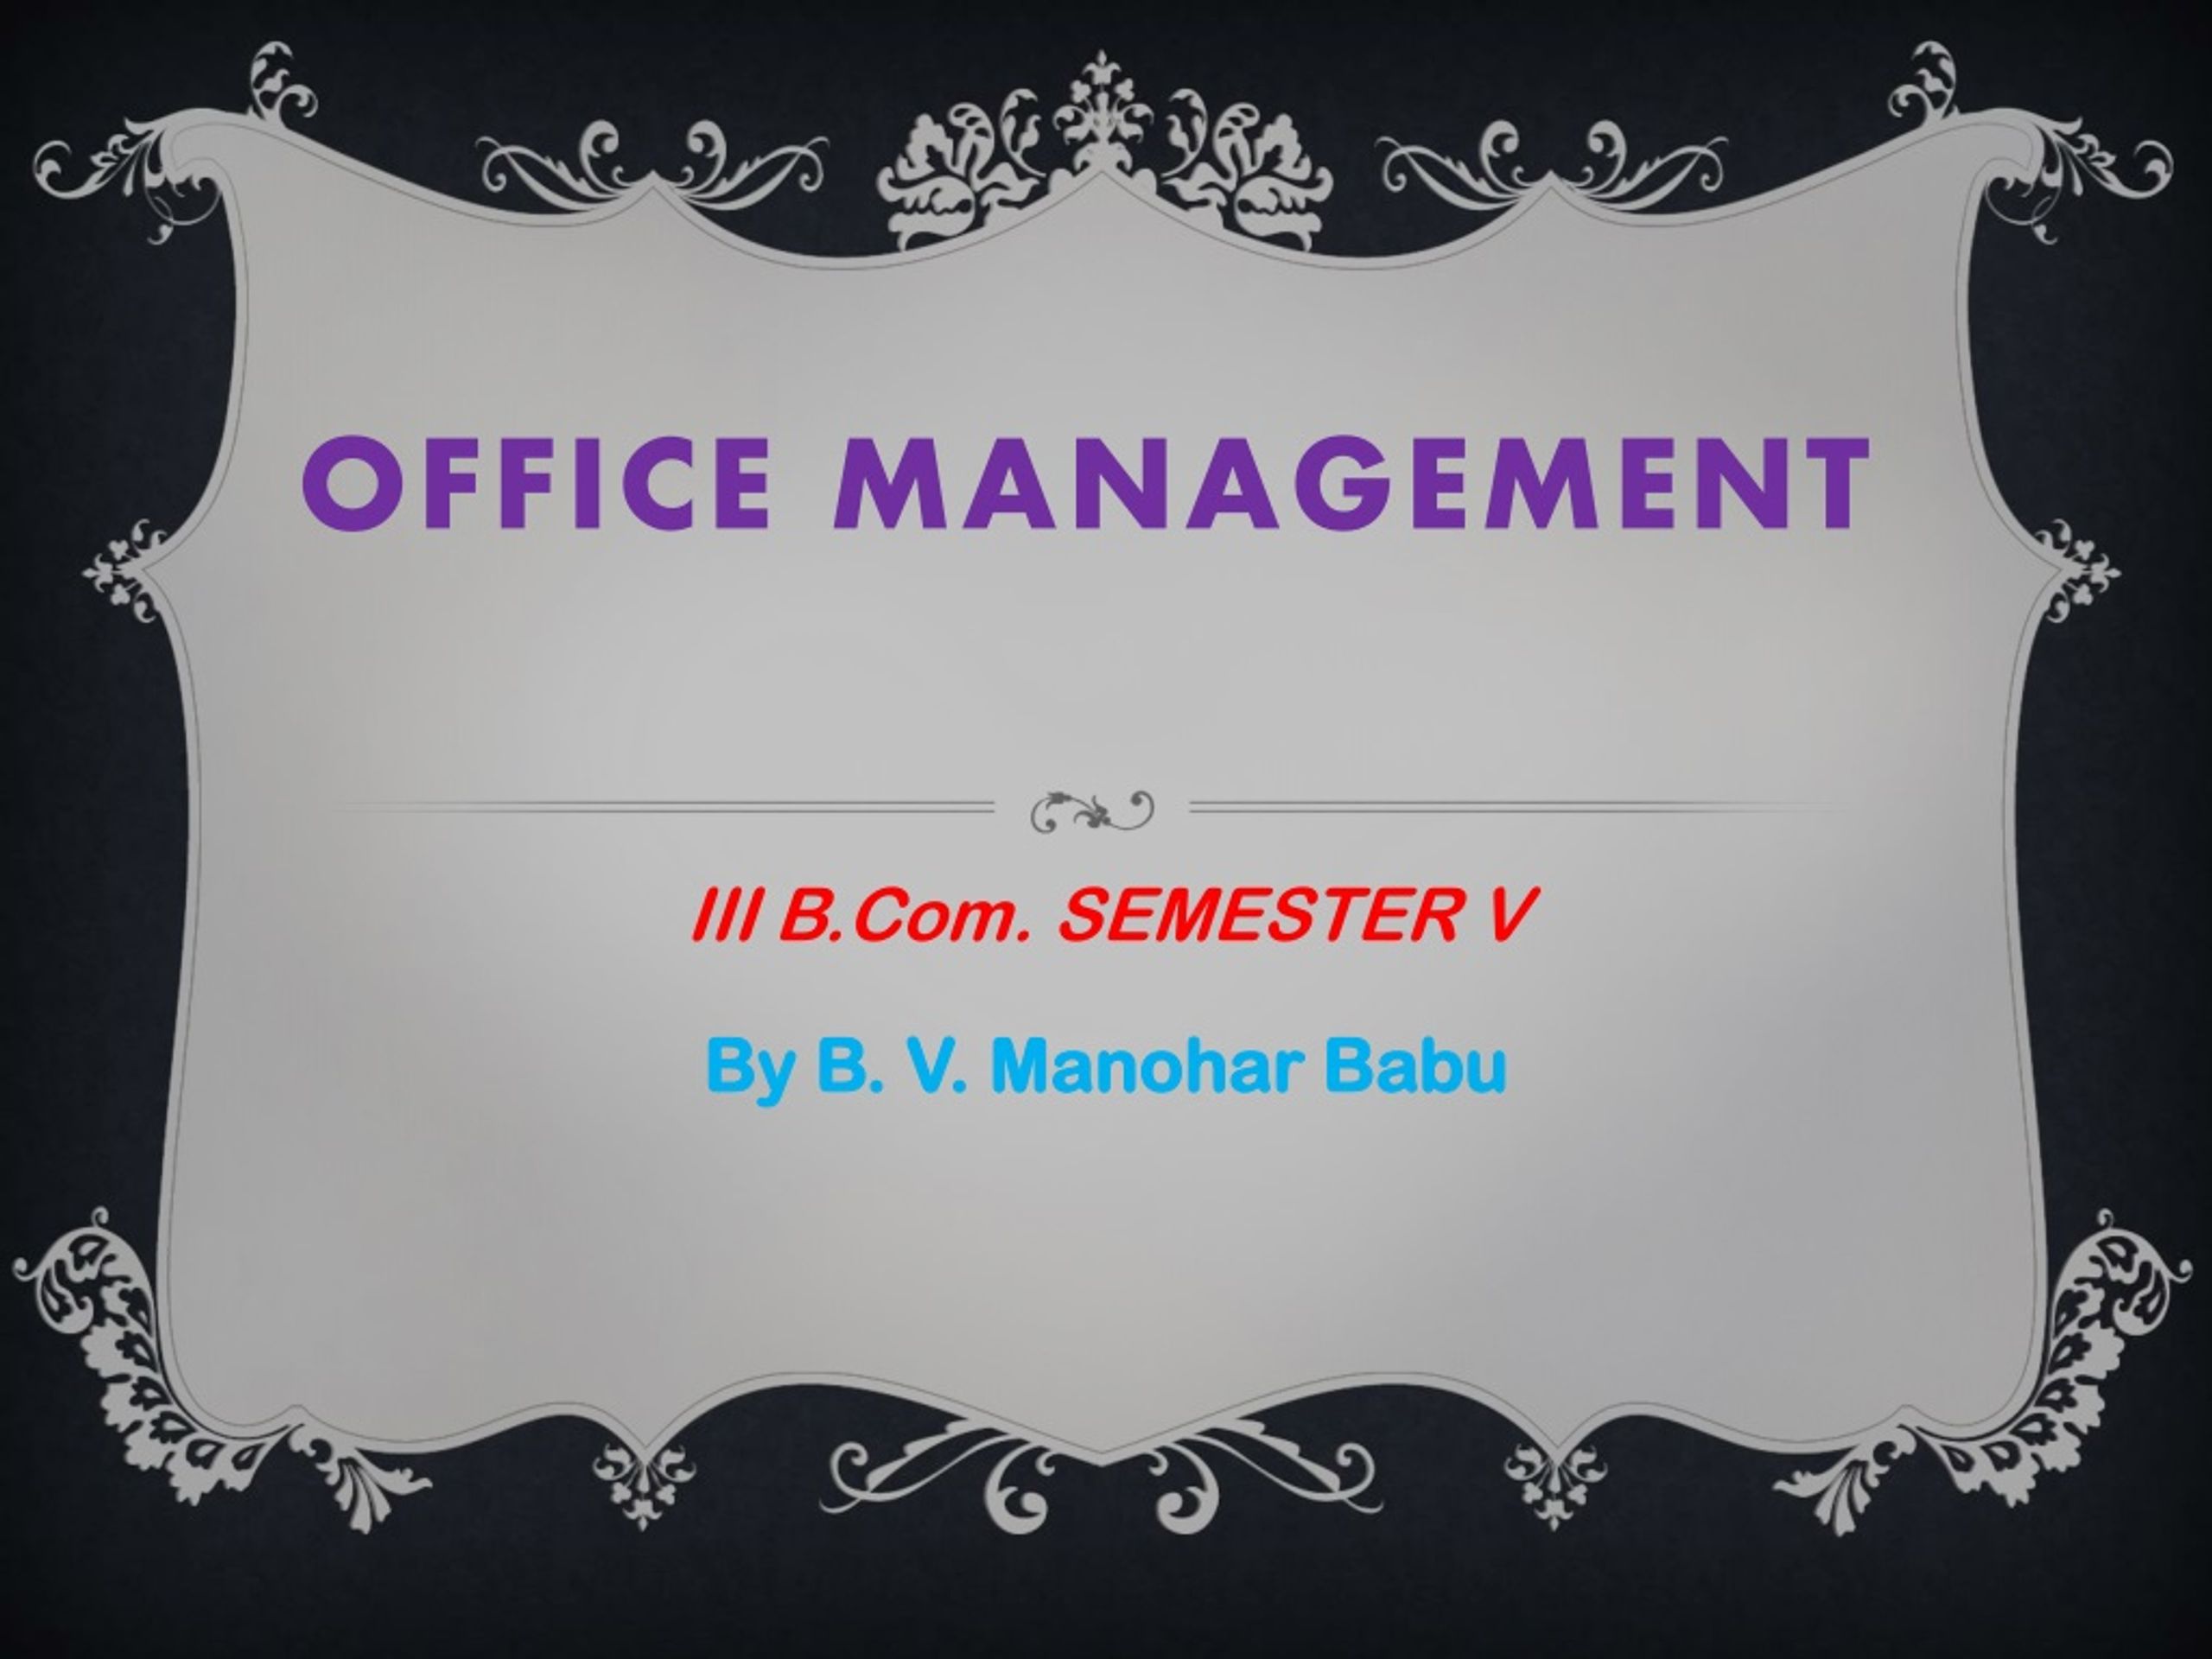 office management presentation ppt